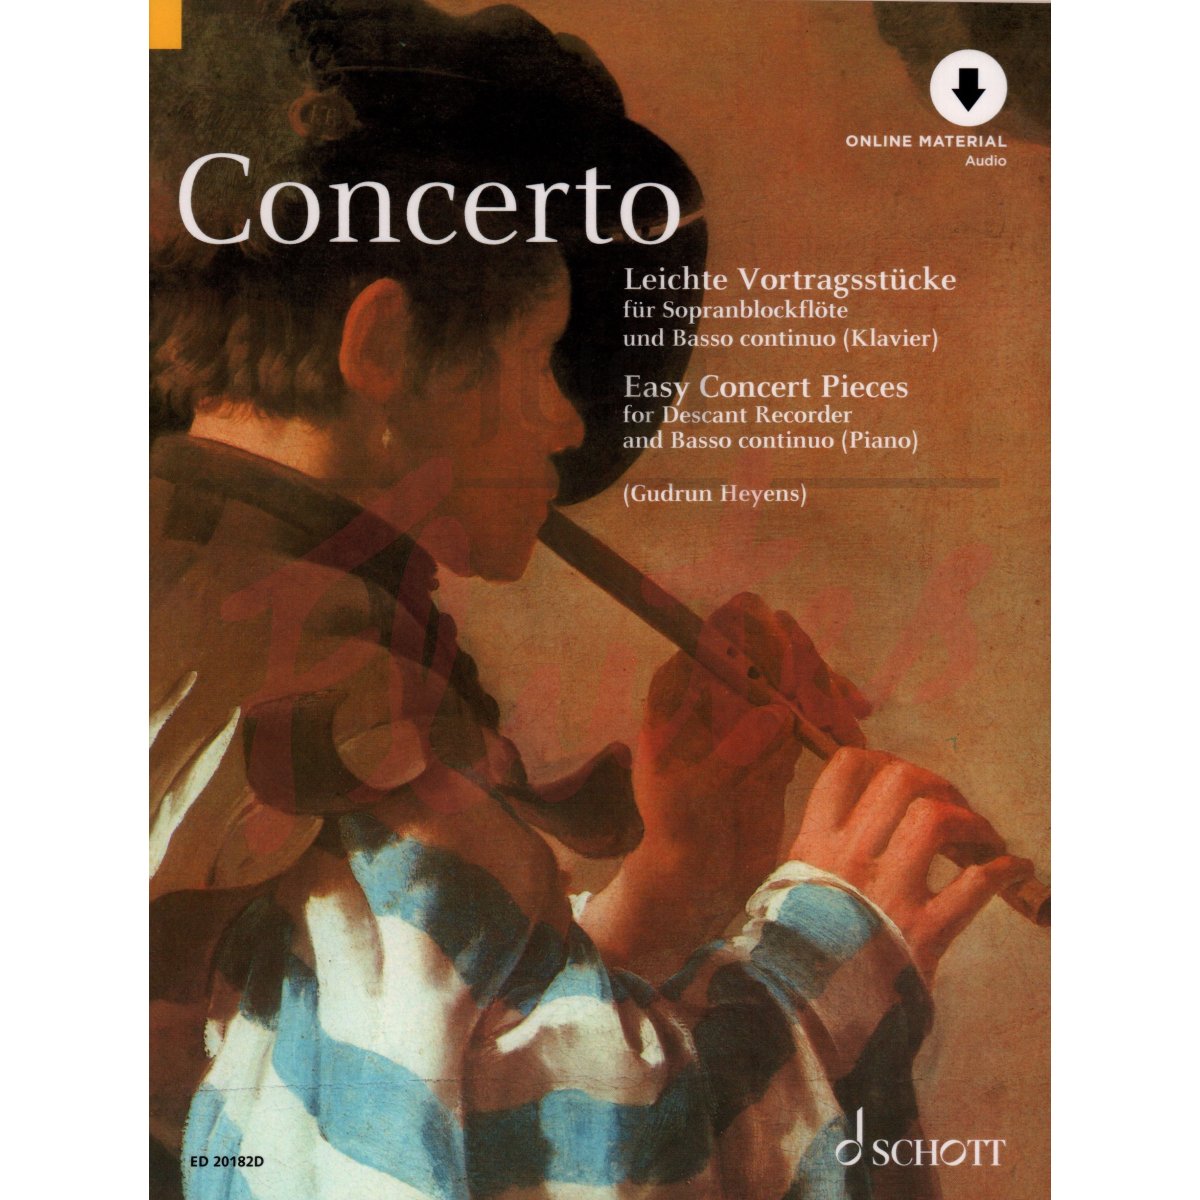 Concerto - Easy Concert Pieces for Descant Recorder and Piano